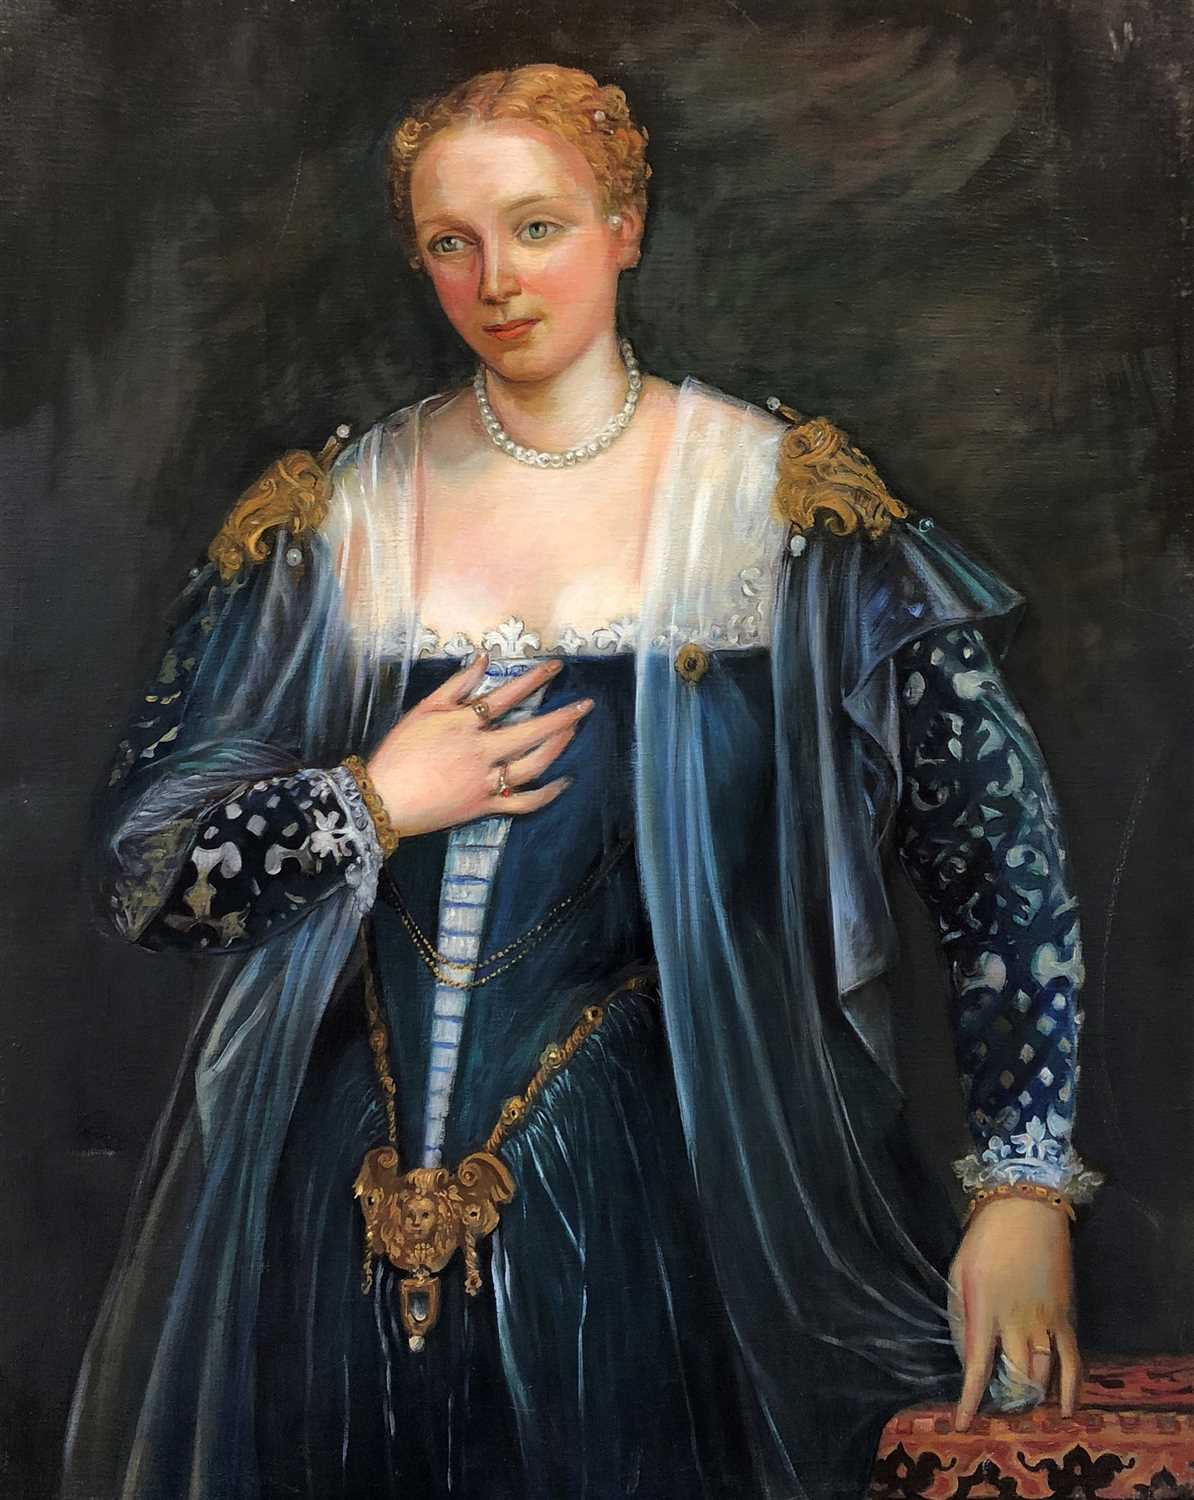 Lot 190 - French portrait